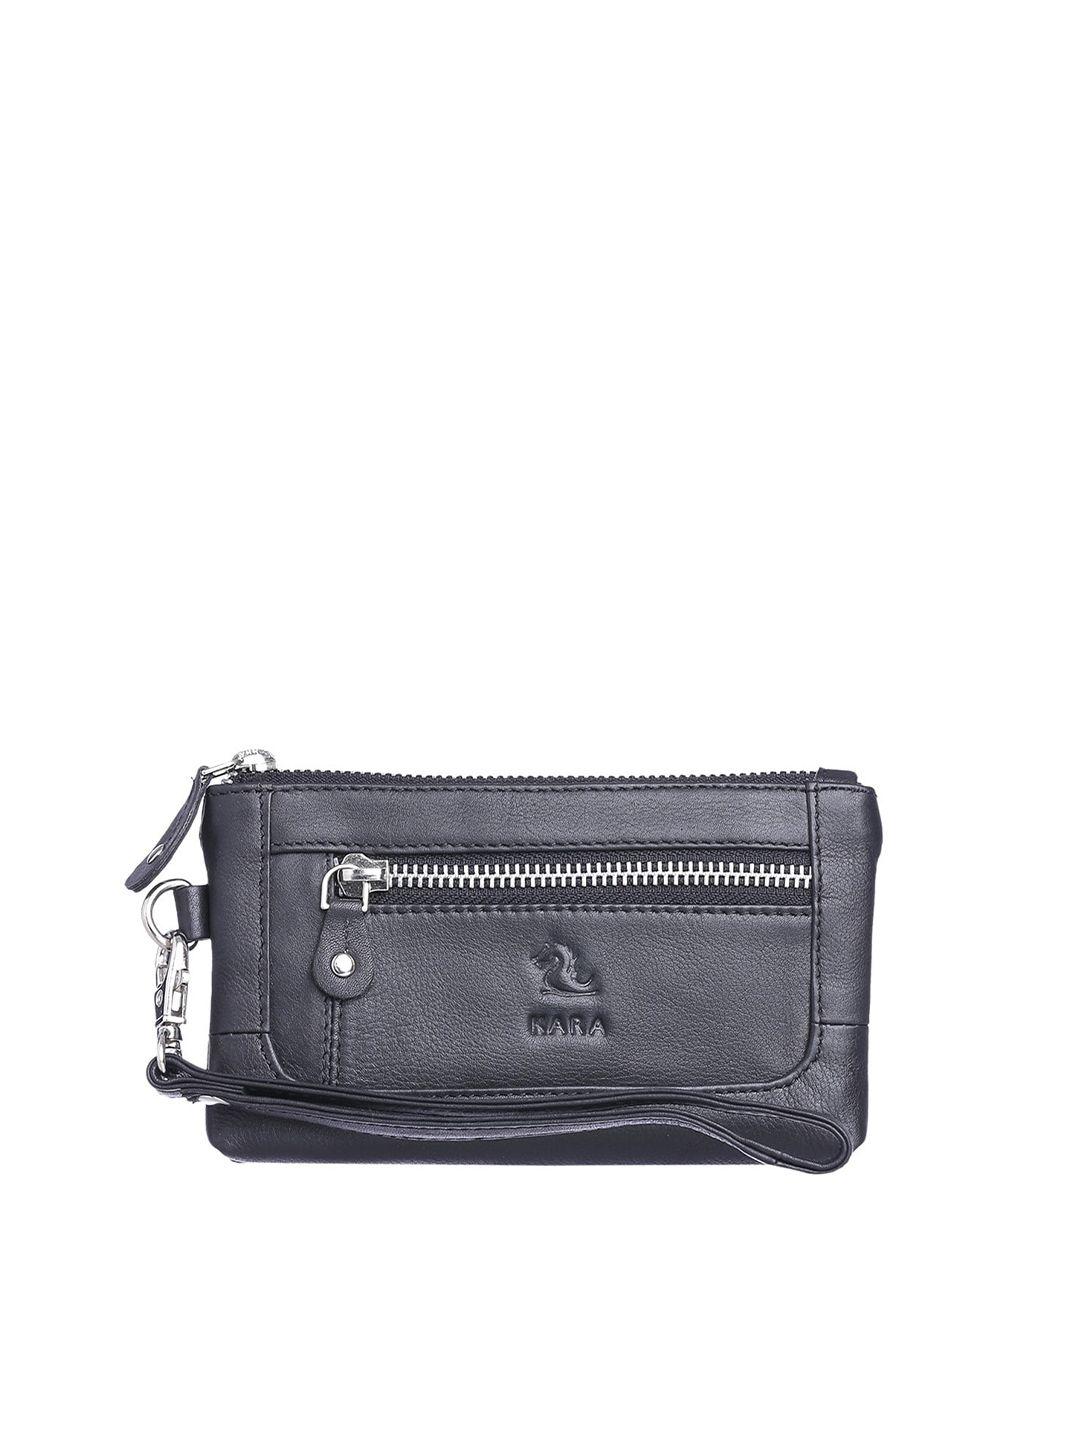 kara women leather purse clutch